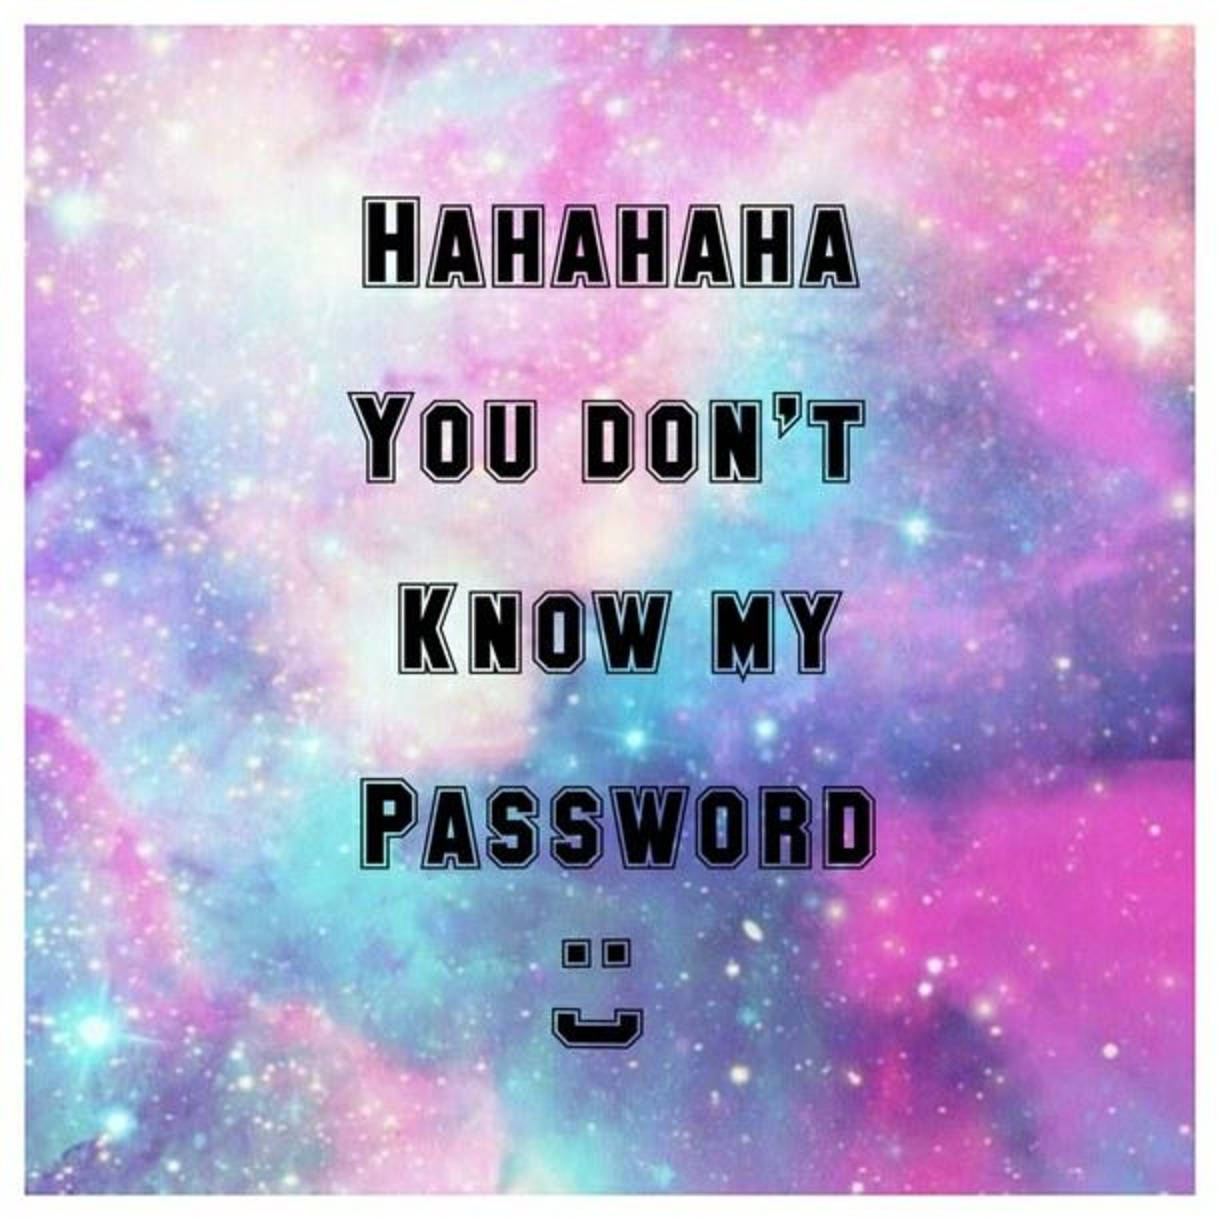 Обои ха тут пароль. Обои с надписью хаха тут пароль. Обои а тут пароль. You don't know my password обои. Картинки с надписью ха ха тут пароль.